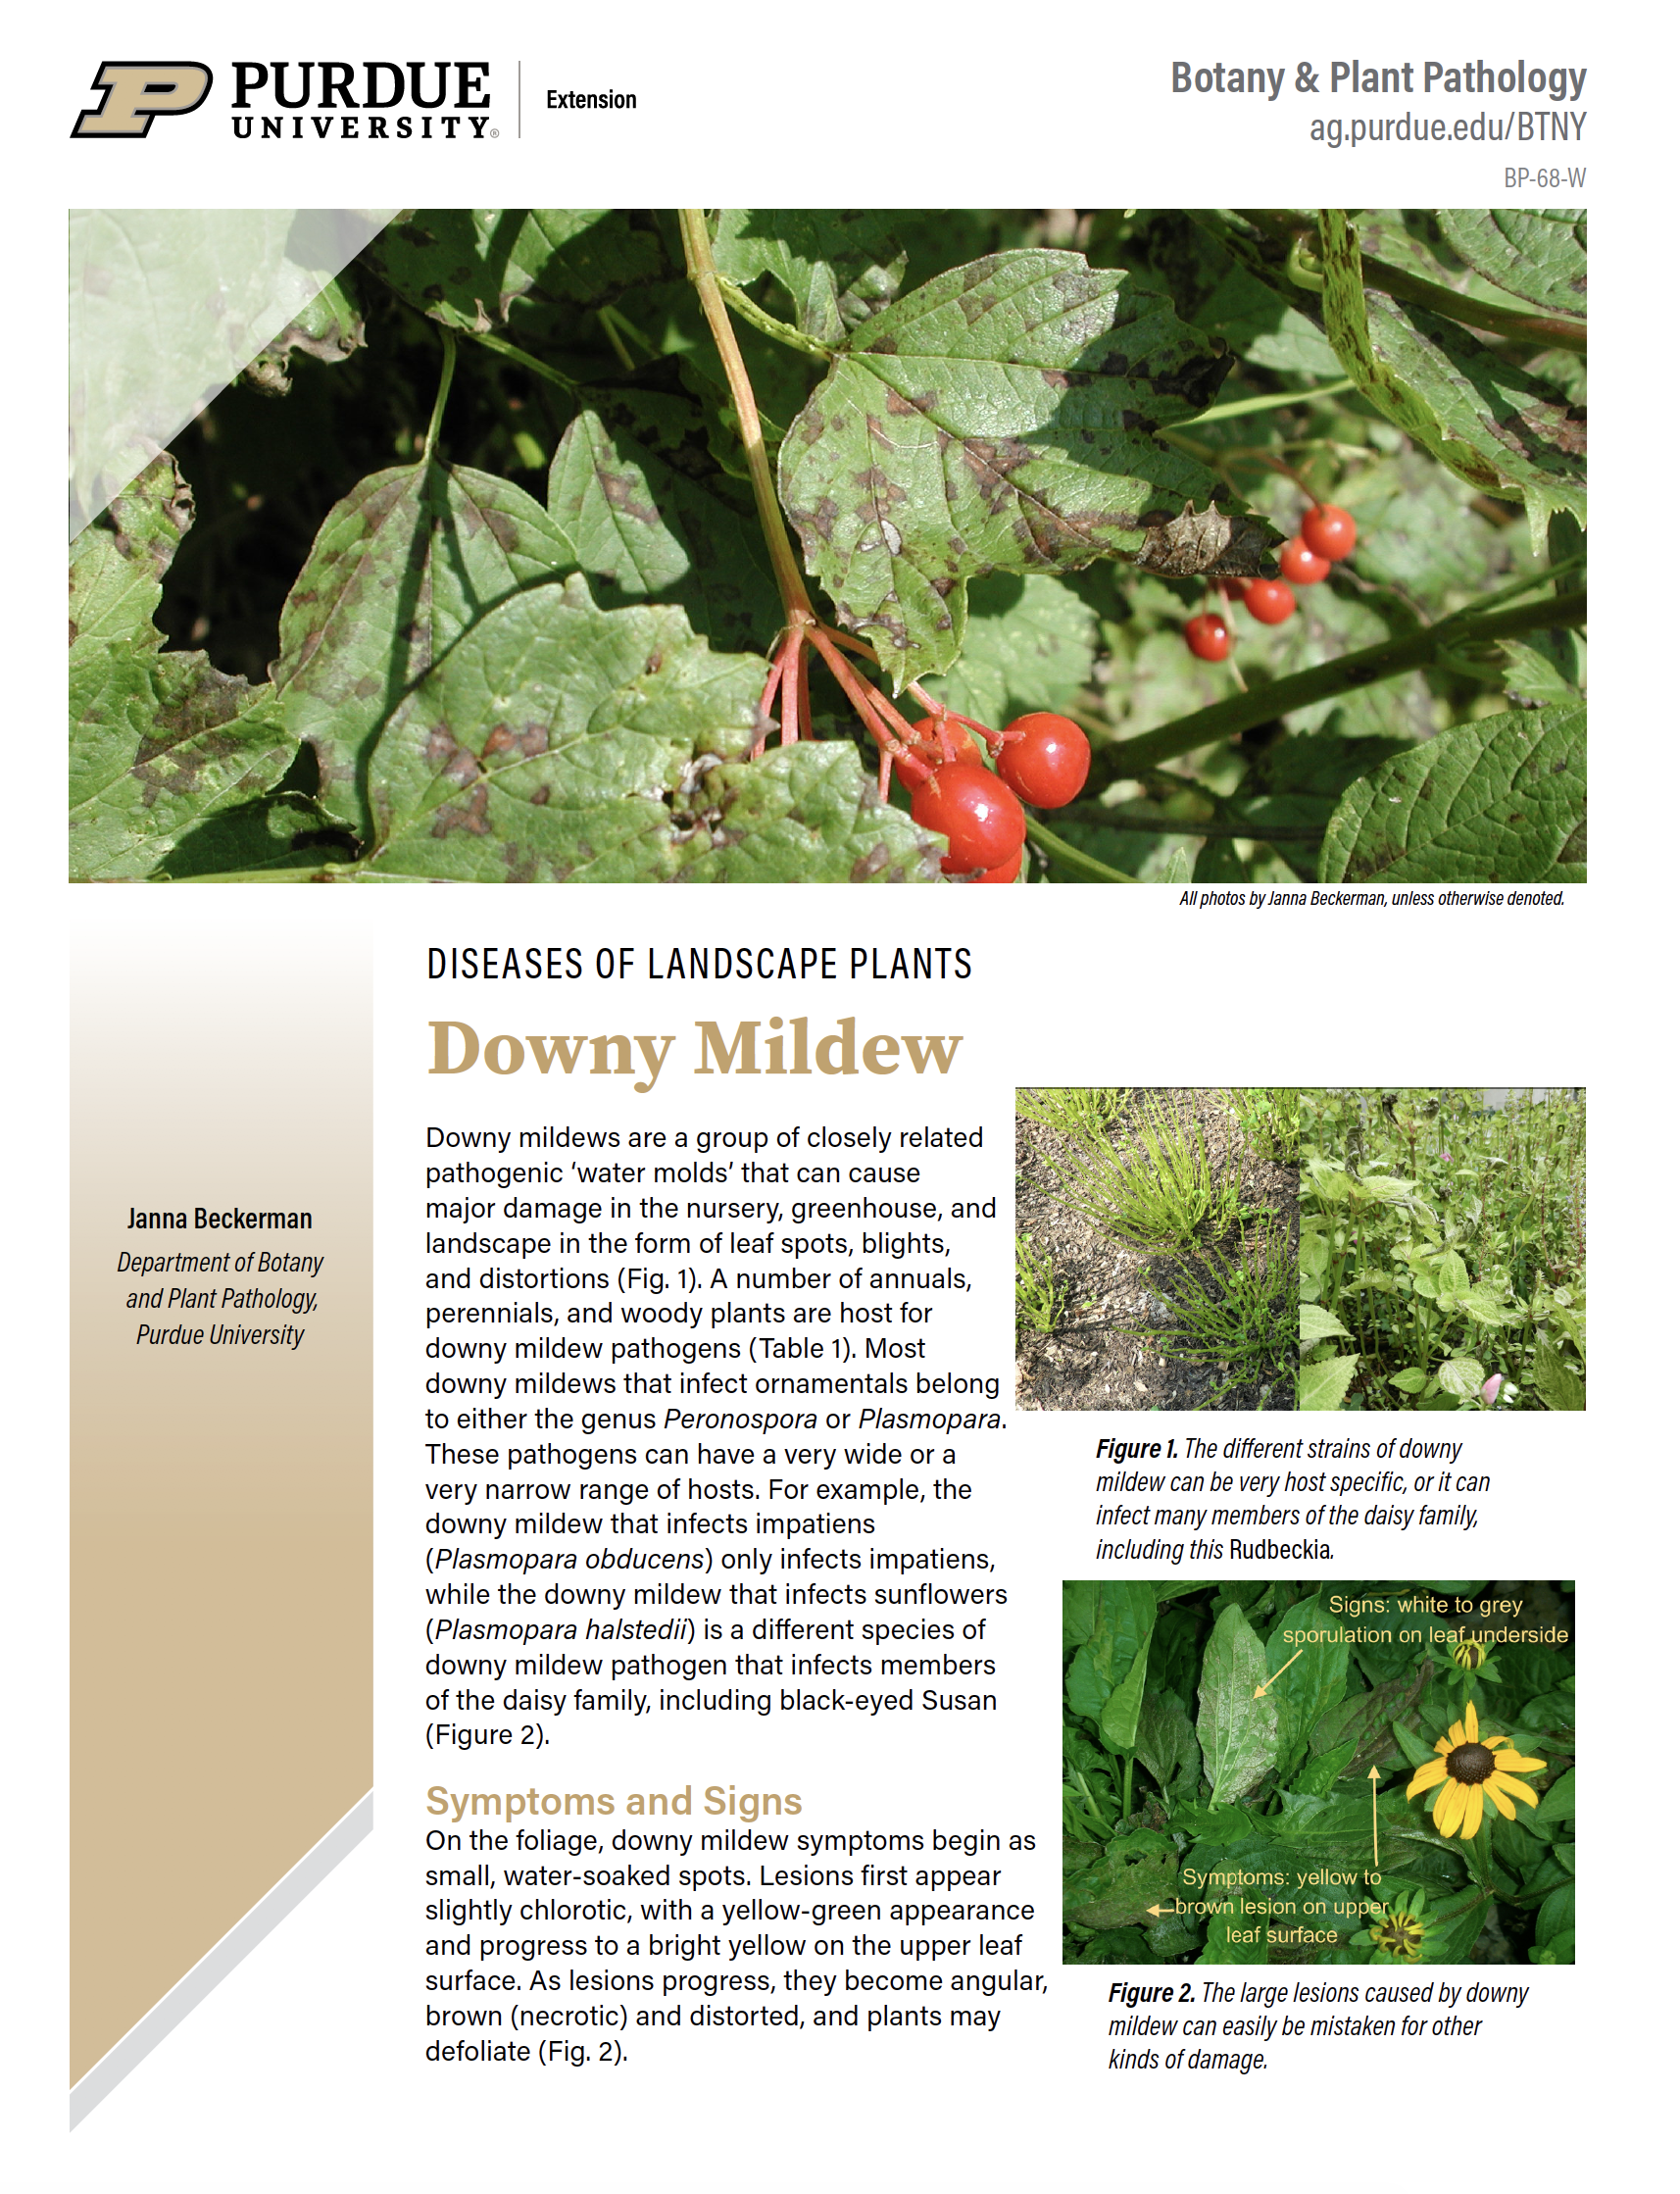 Diseases of Landscape Plants: Downy Mildew